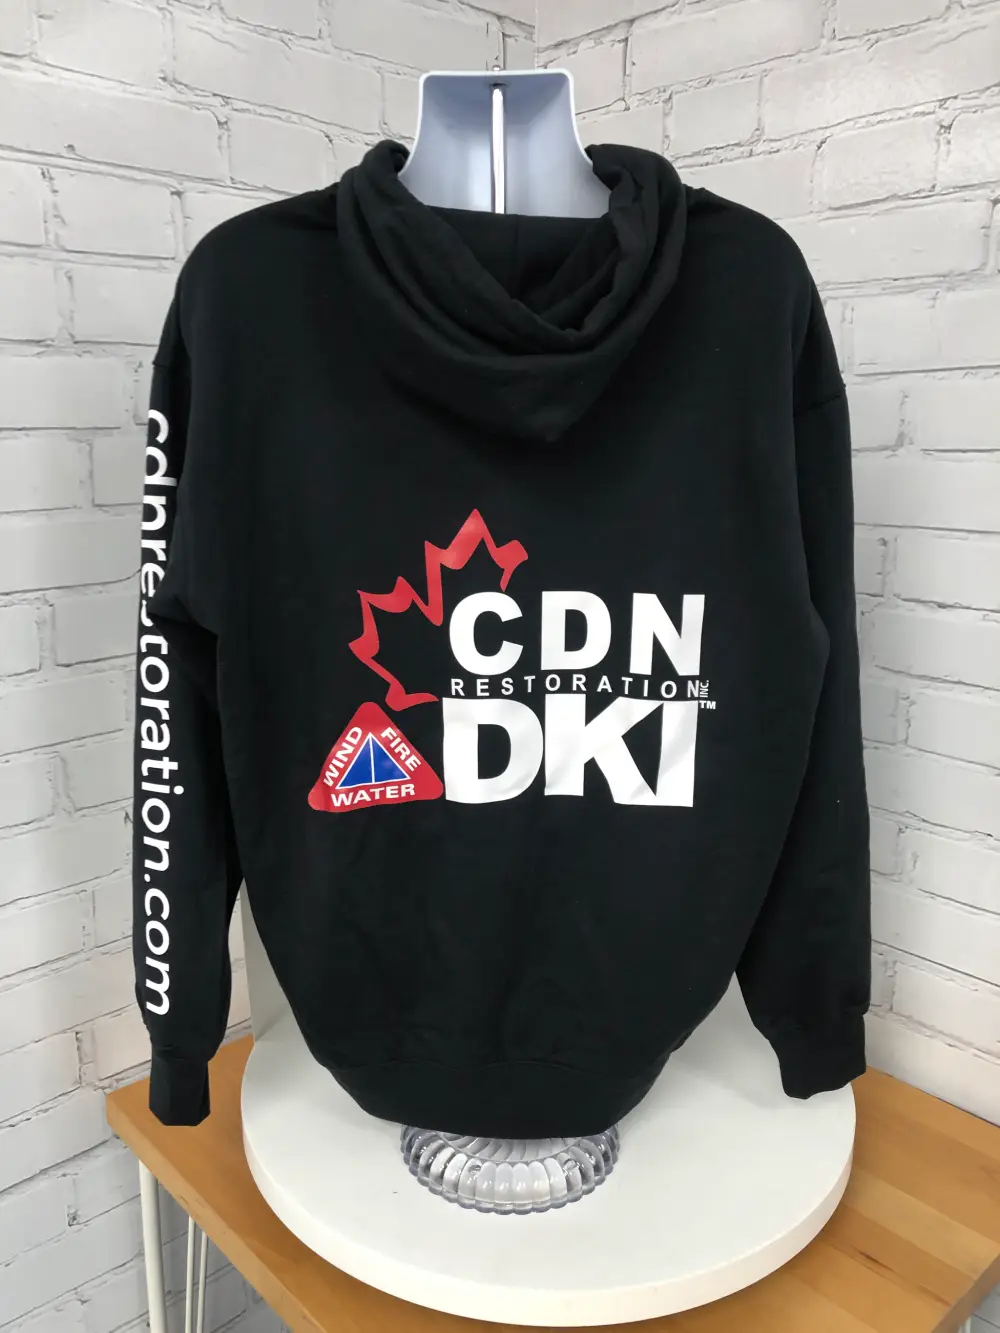 Custom Apparel - Printed Hoodies for CDN Restoration DKI by Workwear Toronto - Back